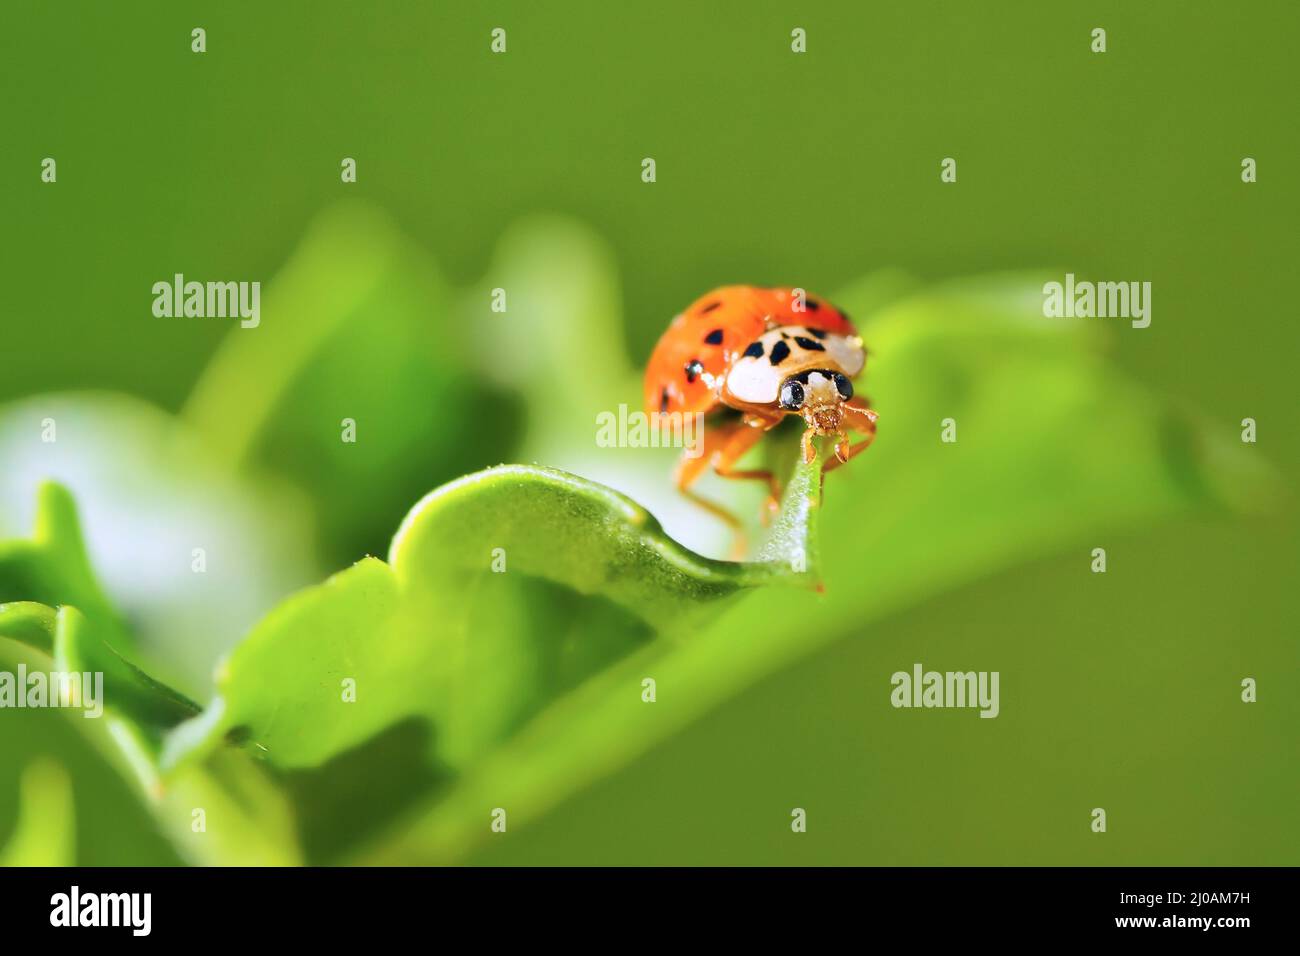 Ladybug sitting on a green grass Stock Photo